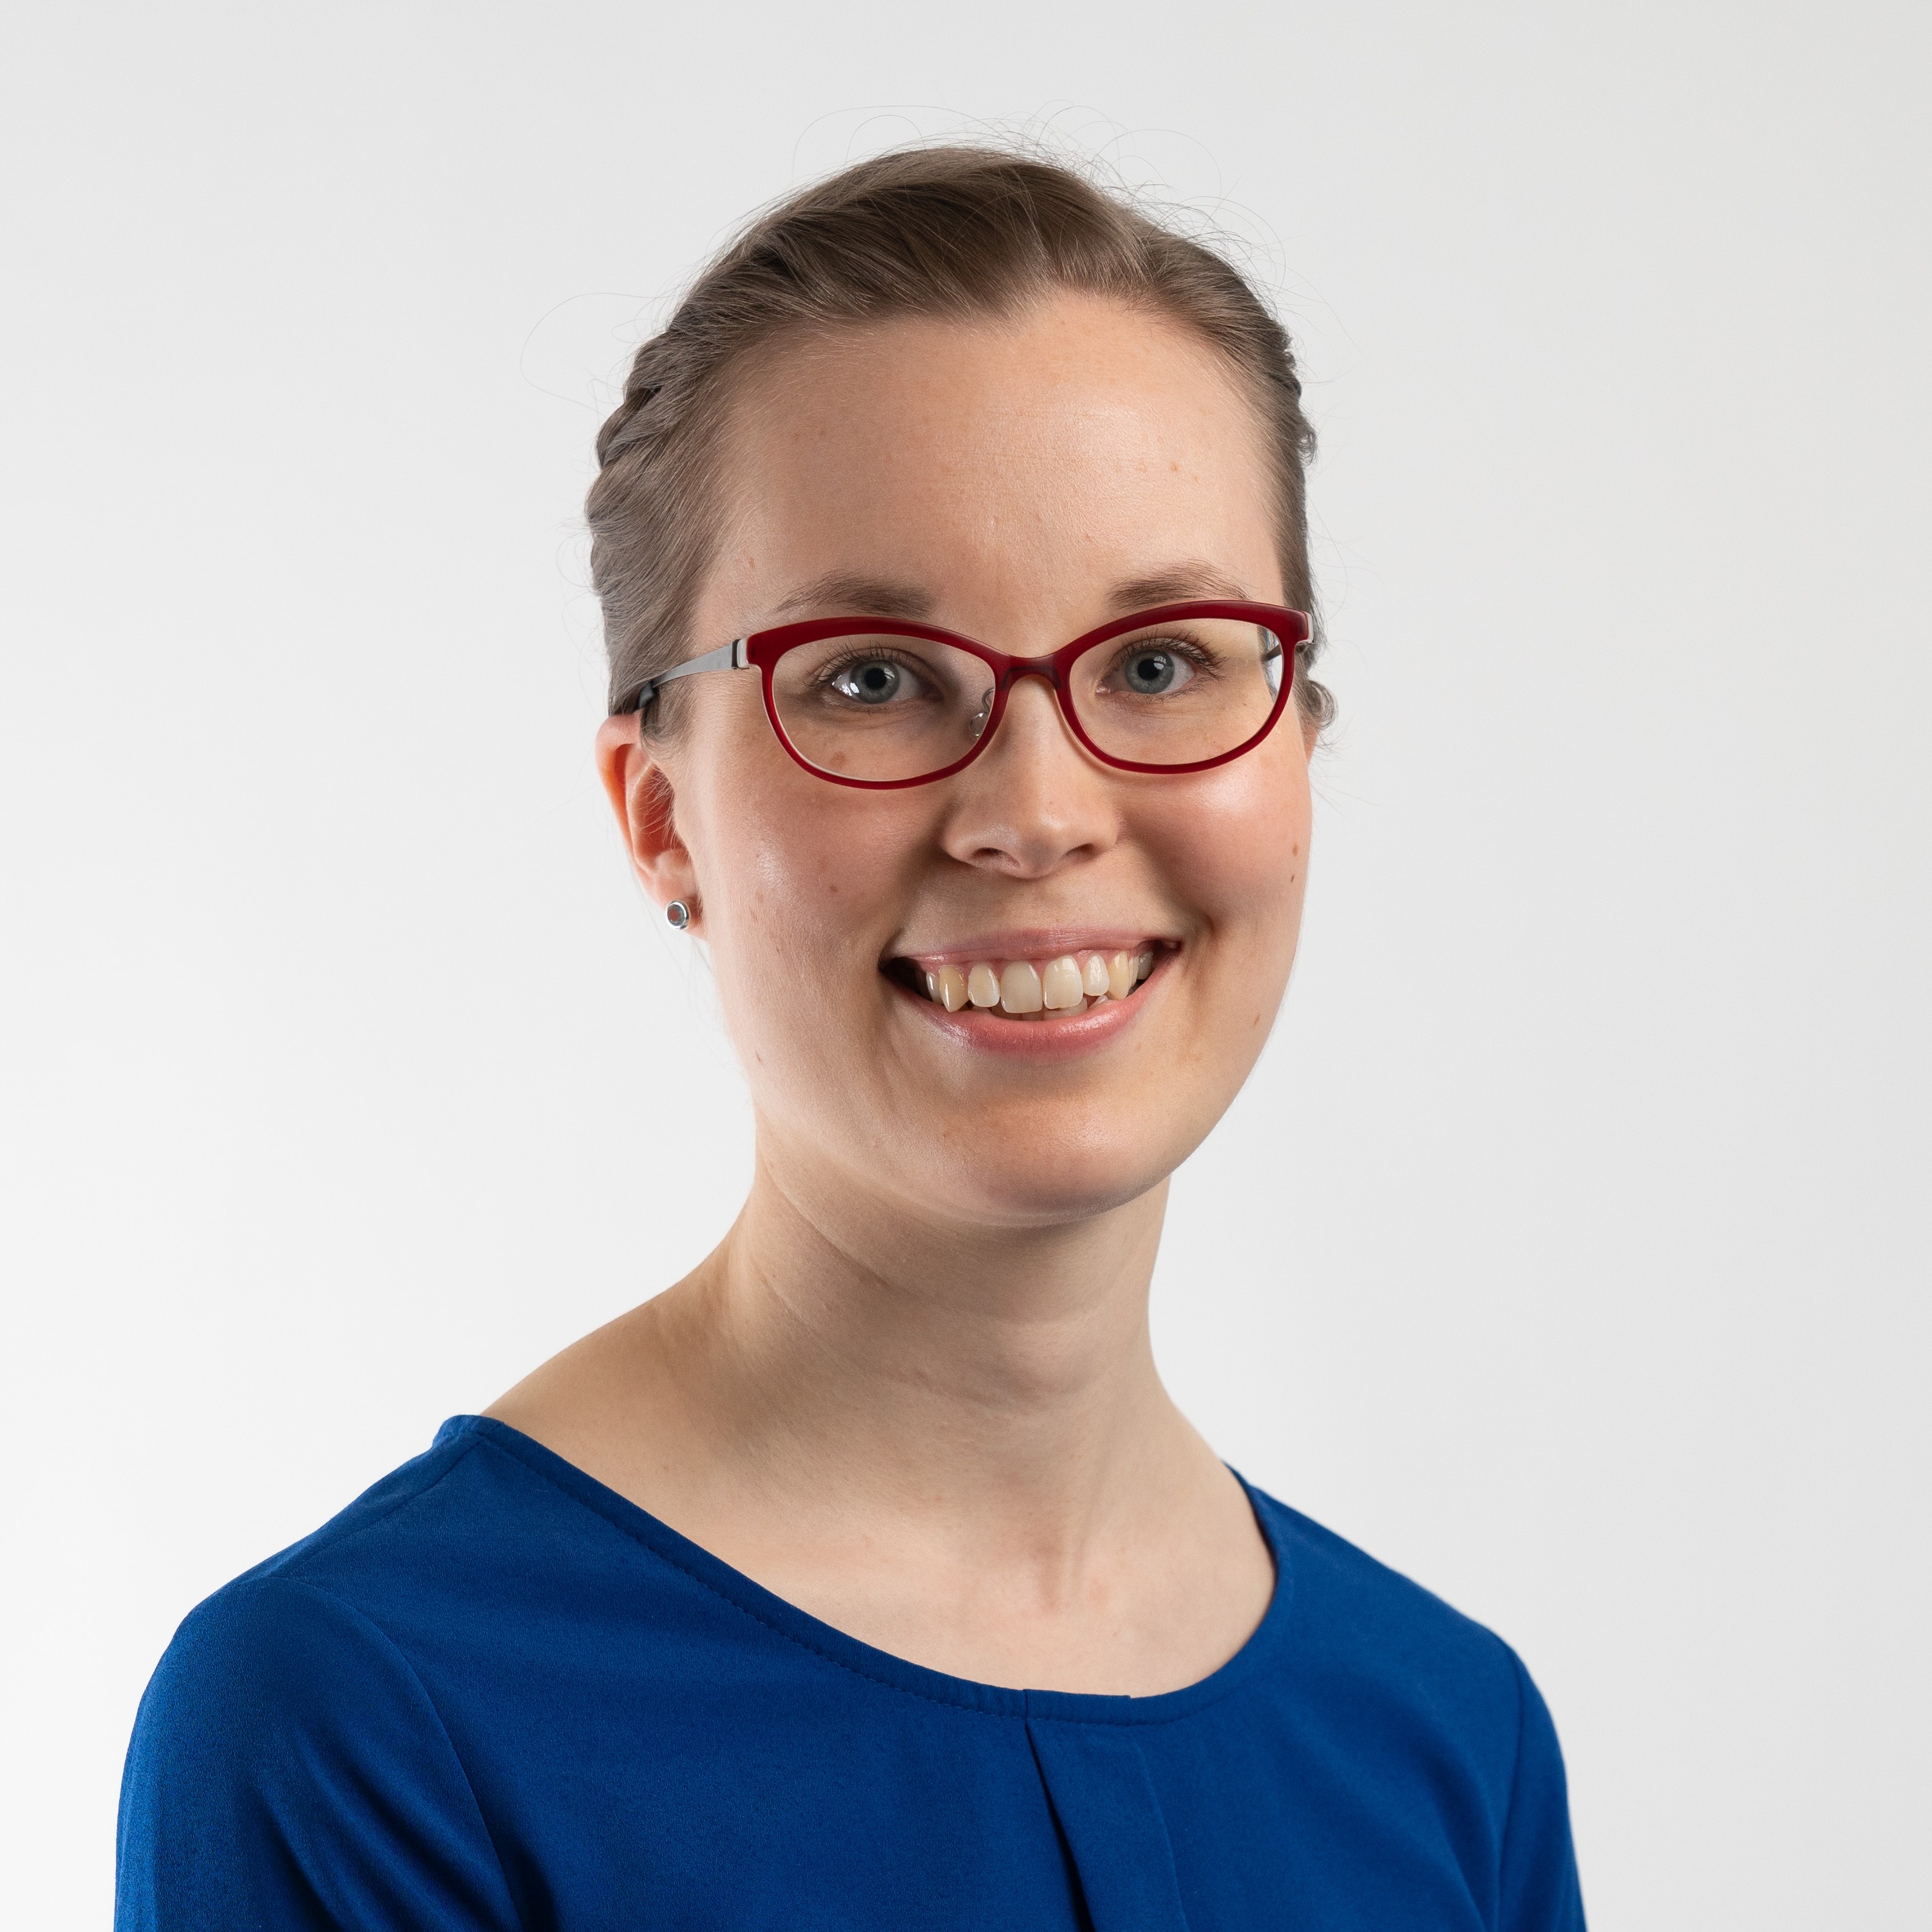 Dr. Elli Käpylä, Manager of Academic Alliances & Applications Scientist